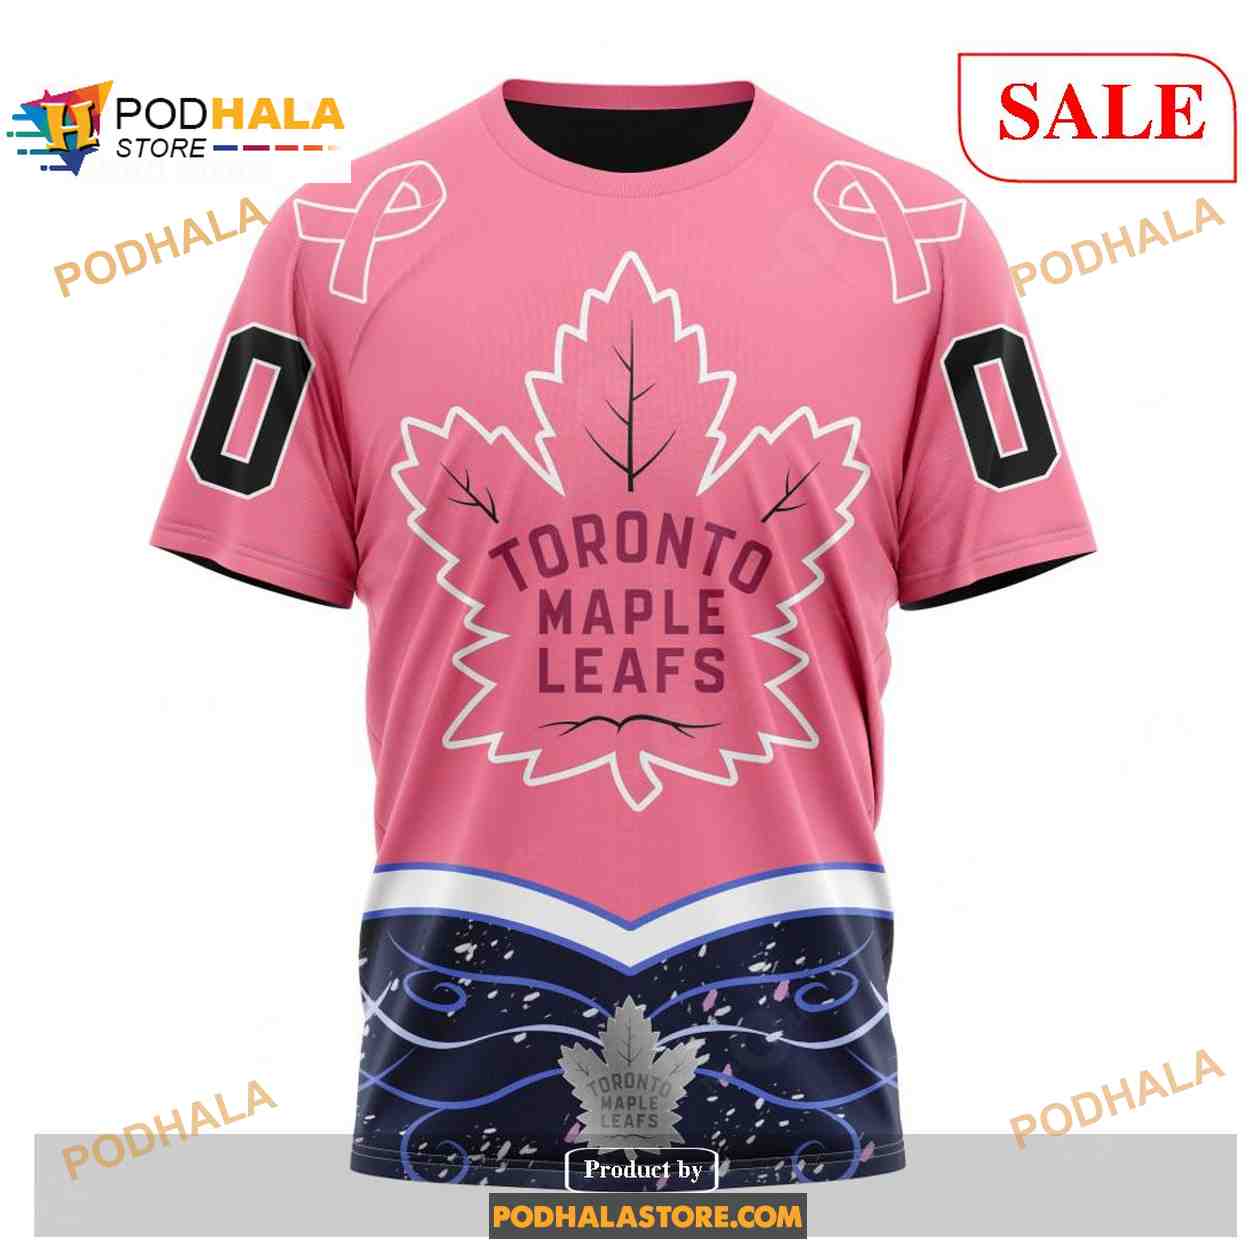 Girls size small Toronto Maple Leafs jersey